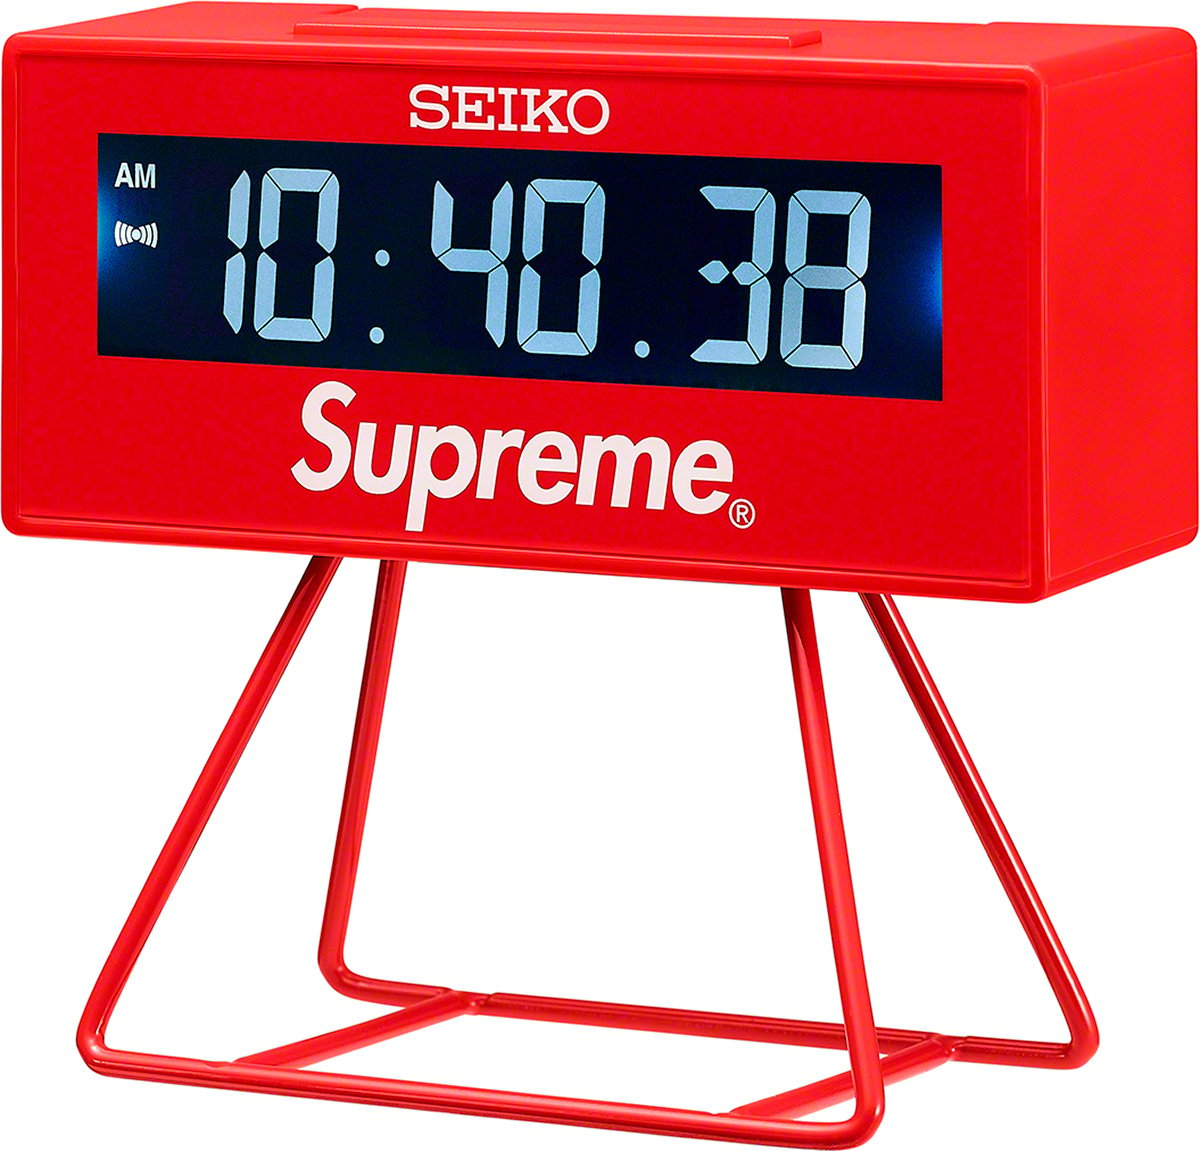 Seiko Marathon Clock - spring summer 2021 - Supreme